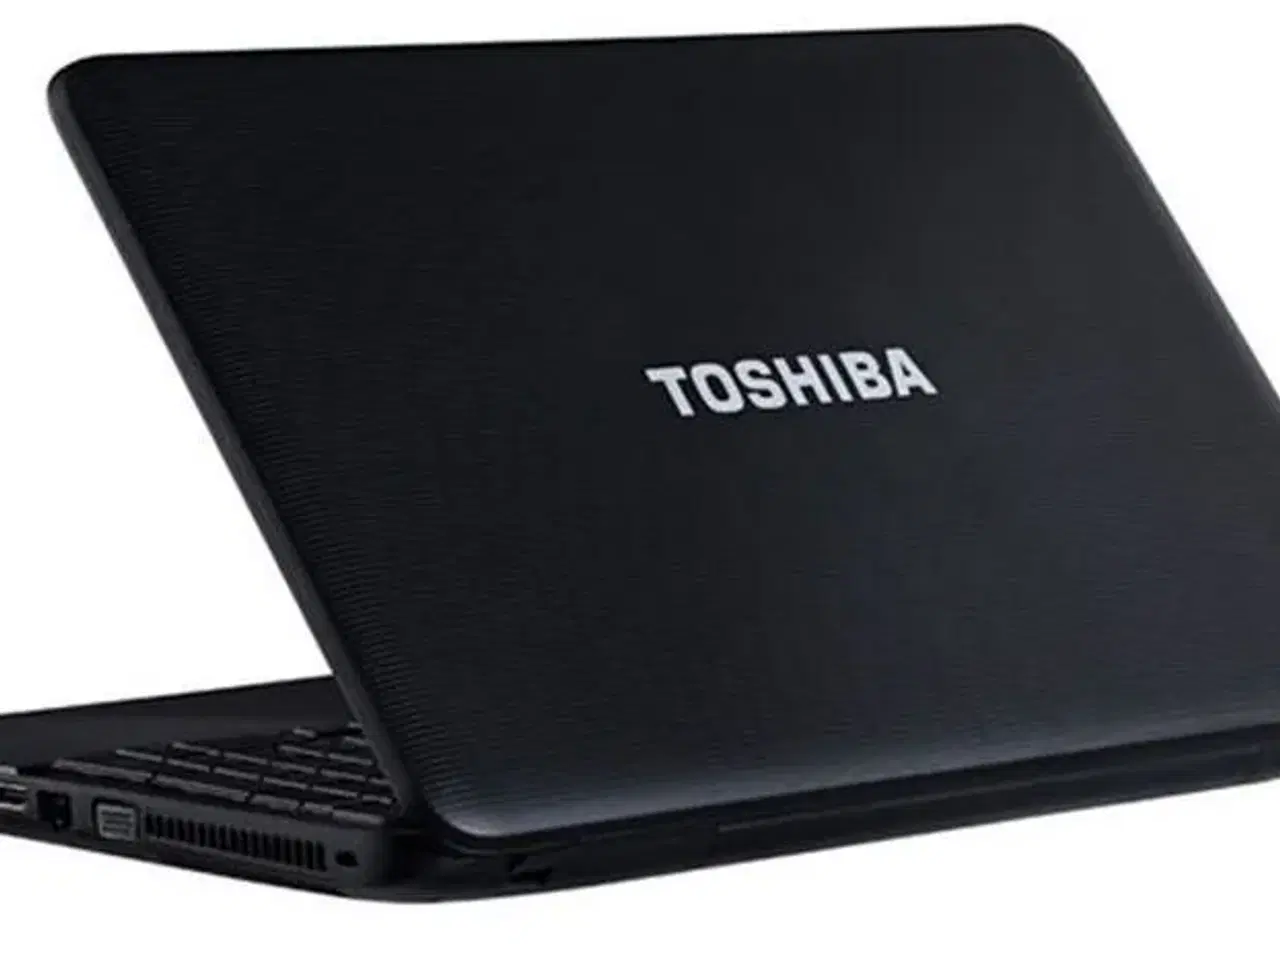 Billede 3 - Toshiba Satelite Pro L300, 4 GB ram